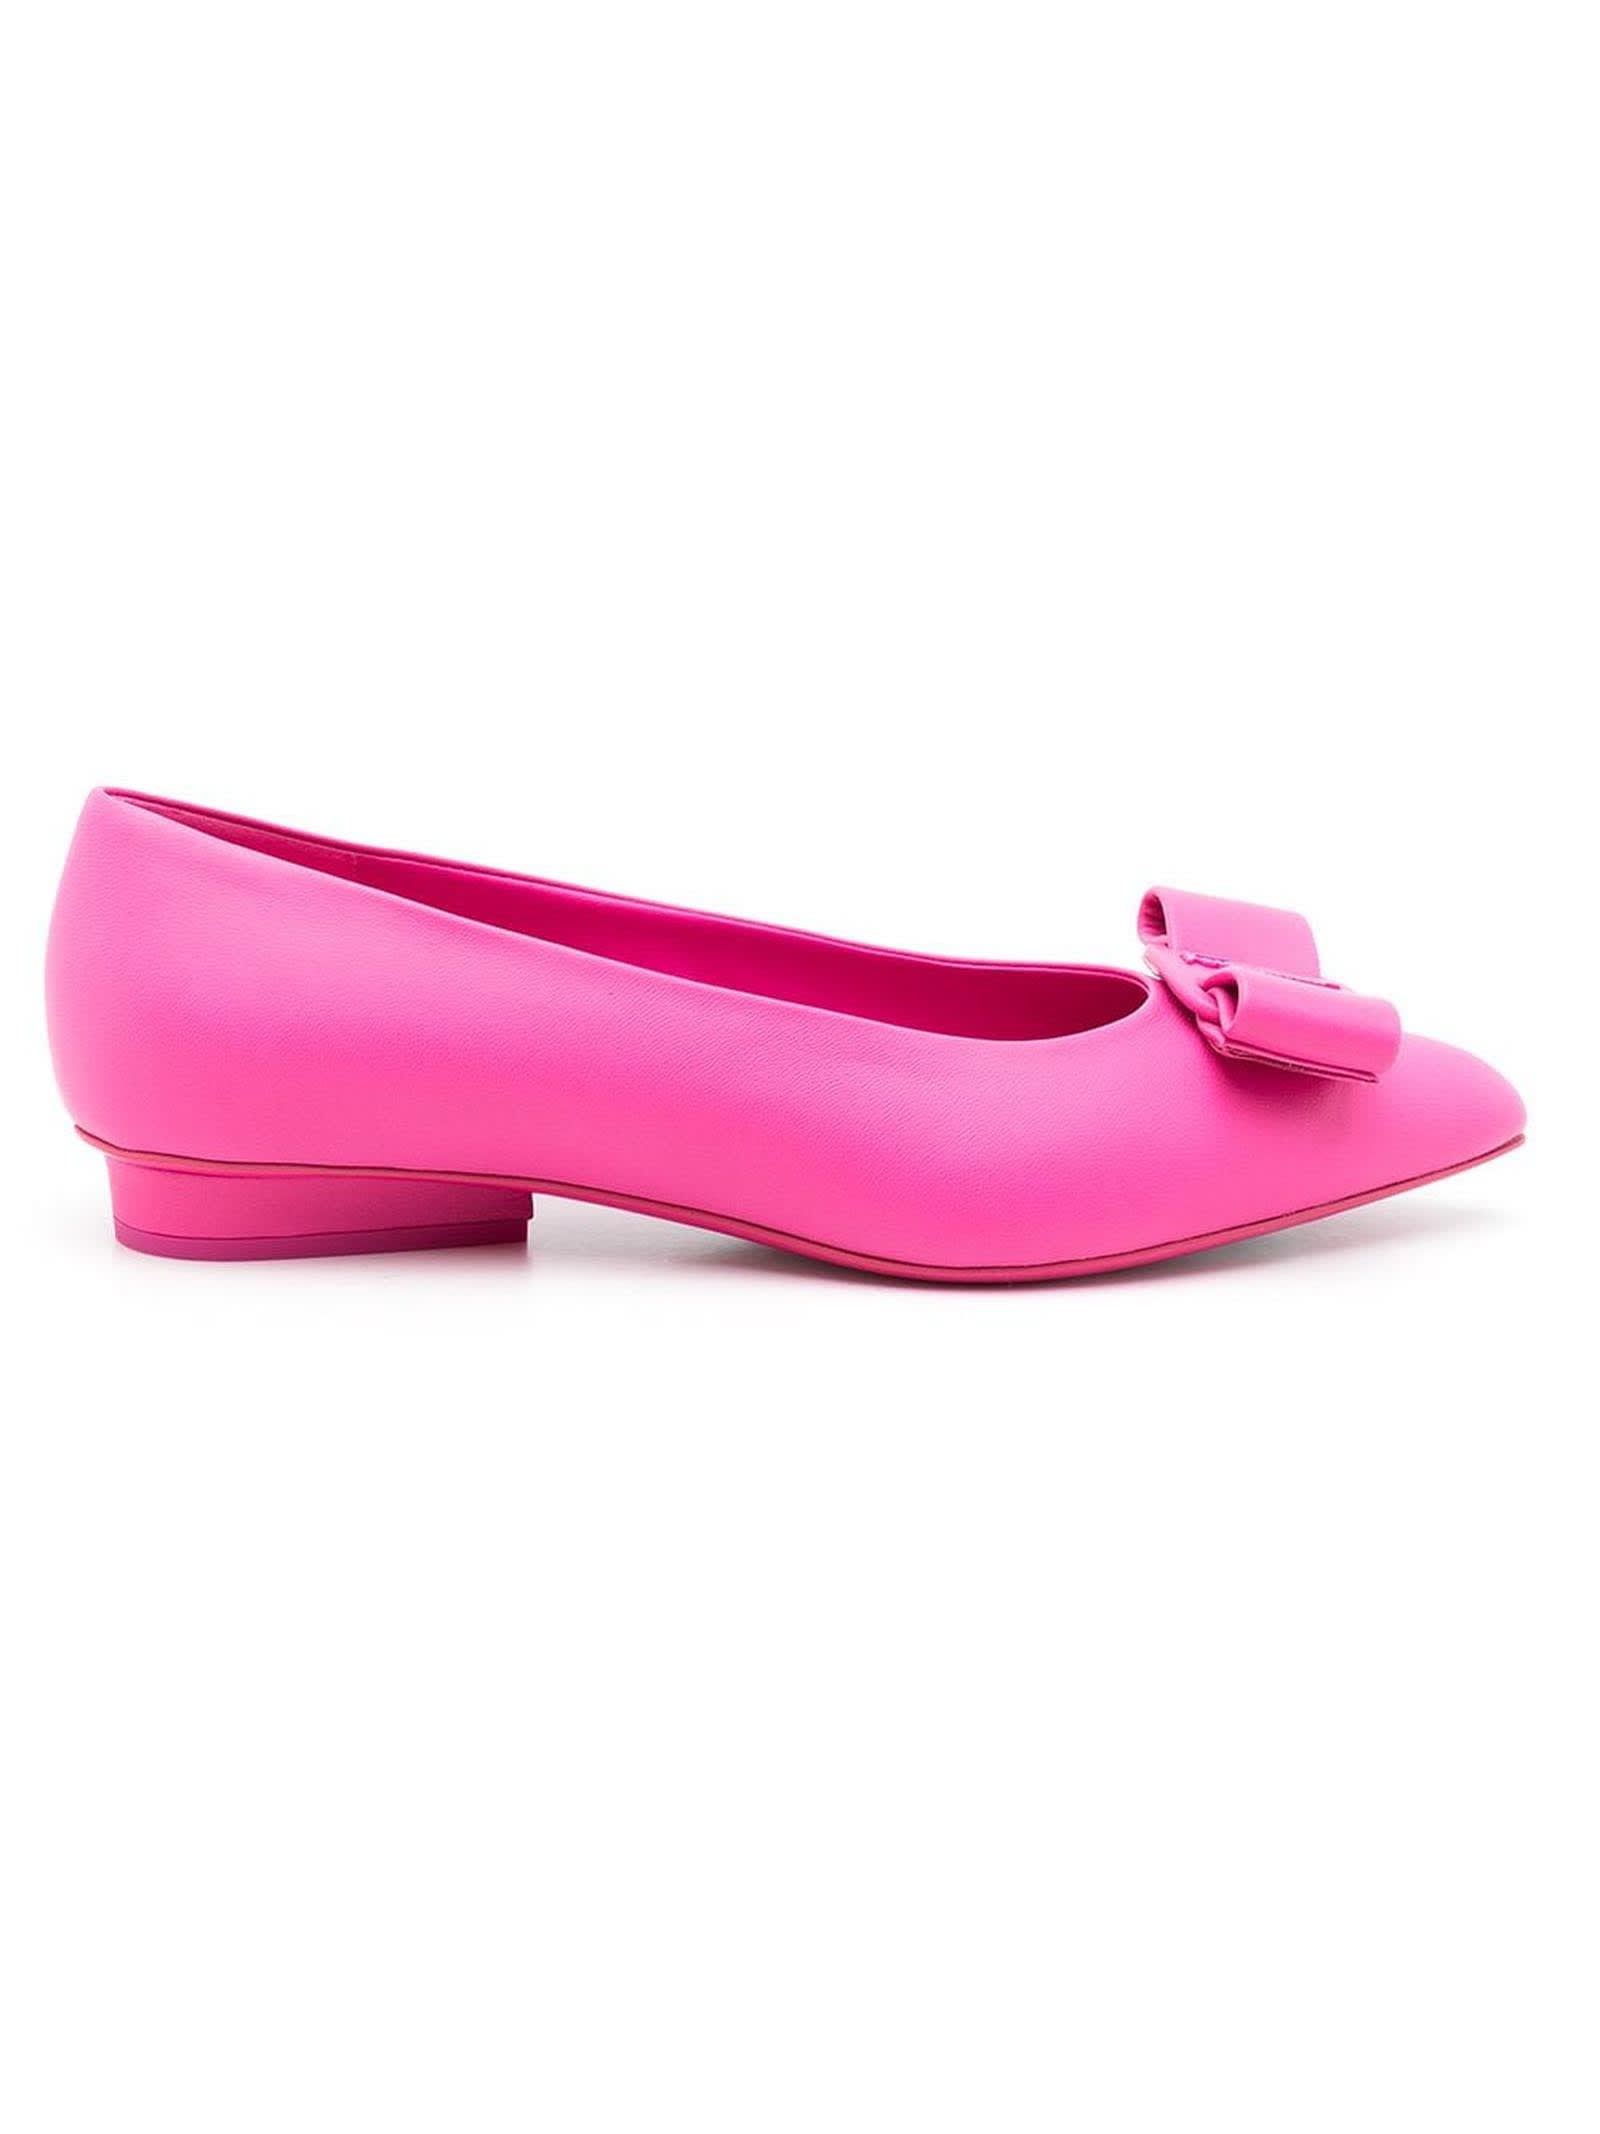 Salvatore Ferragamo Bright Pink Lambskin Ballerina Shoes